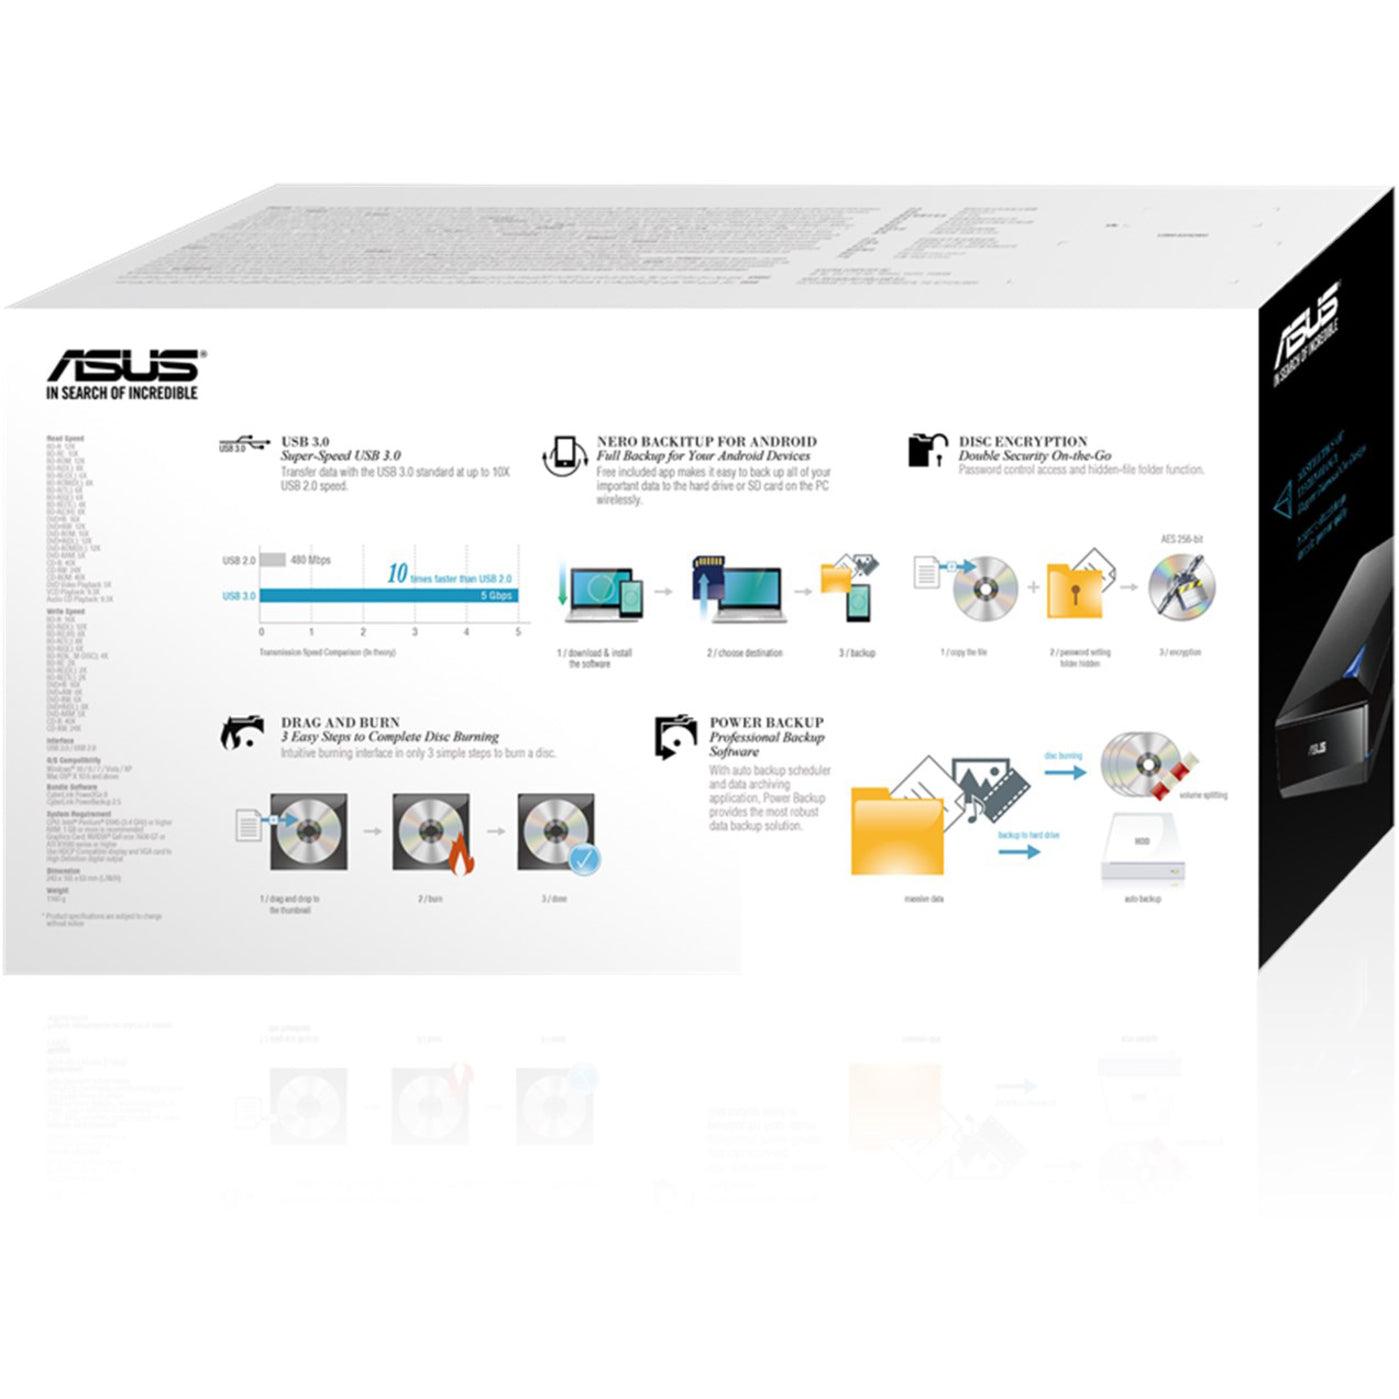 Asus BW-16D1X-U Turbo Drive Blu-ray Writer, Powerful 16X Writing Speed and USB 3.0